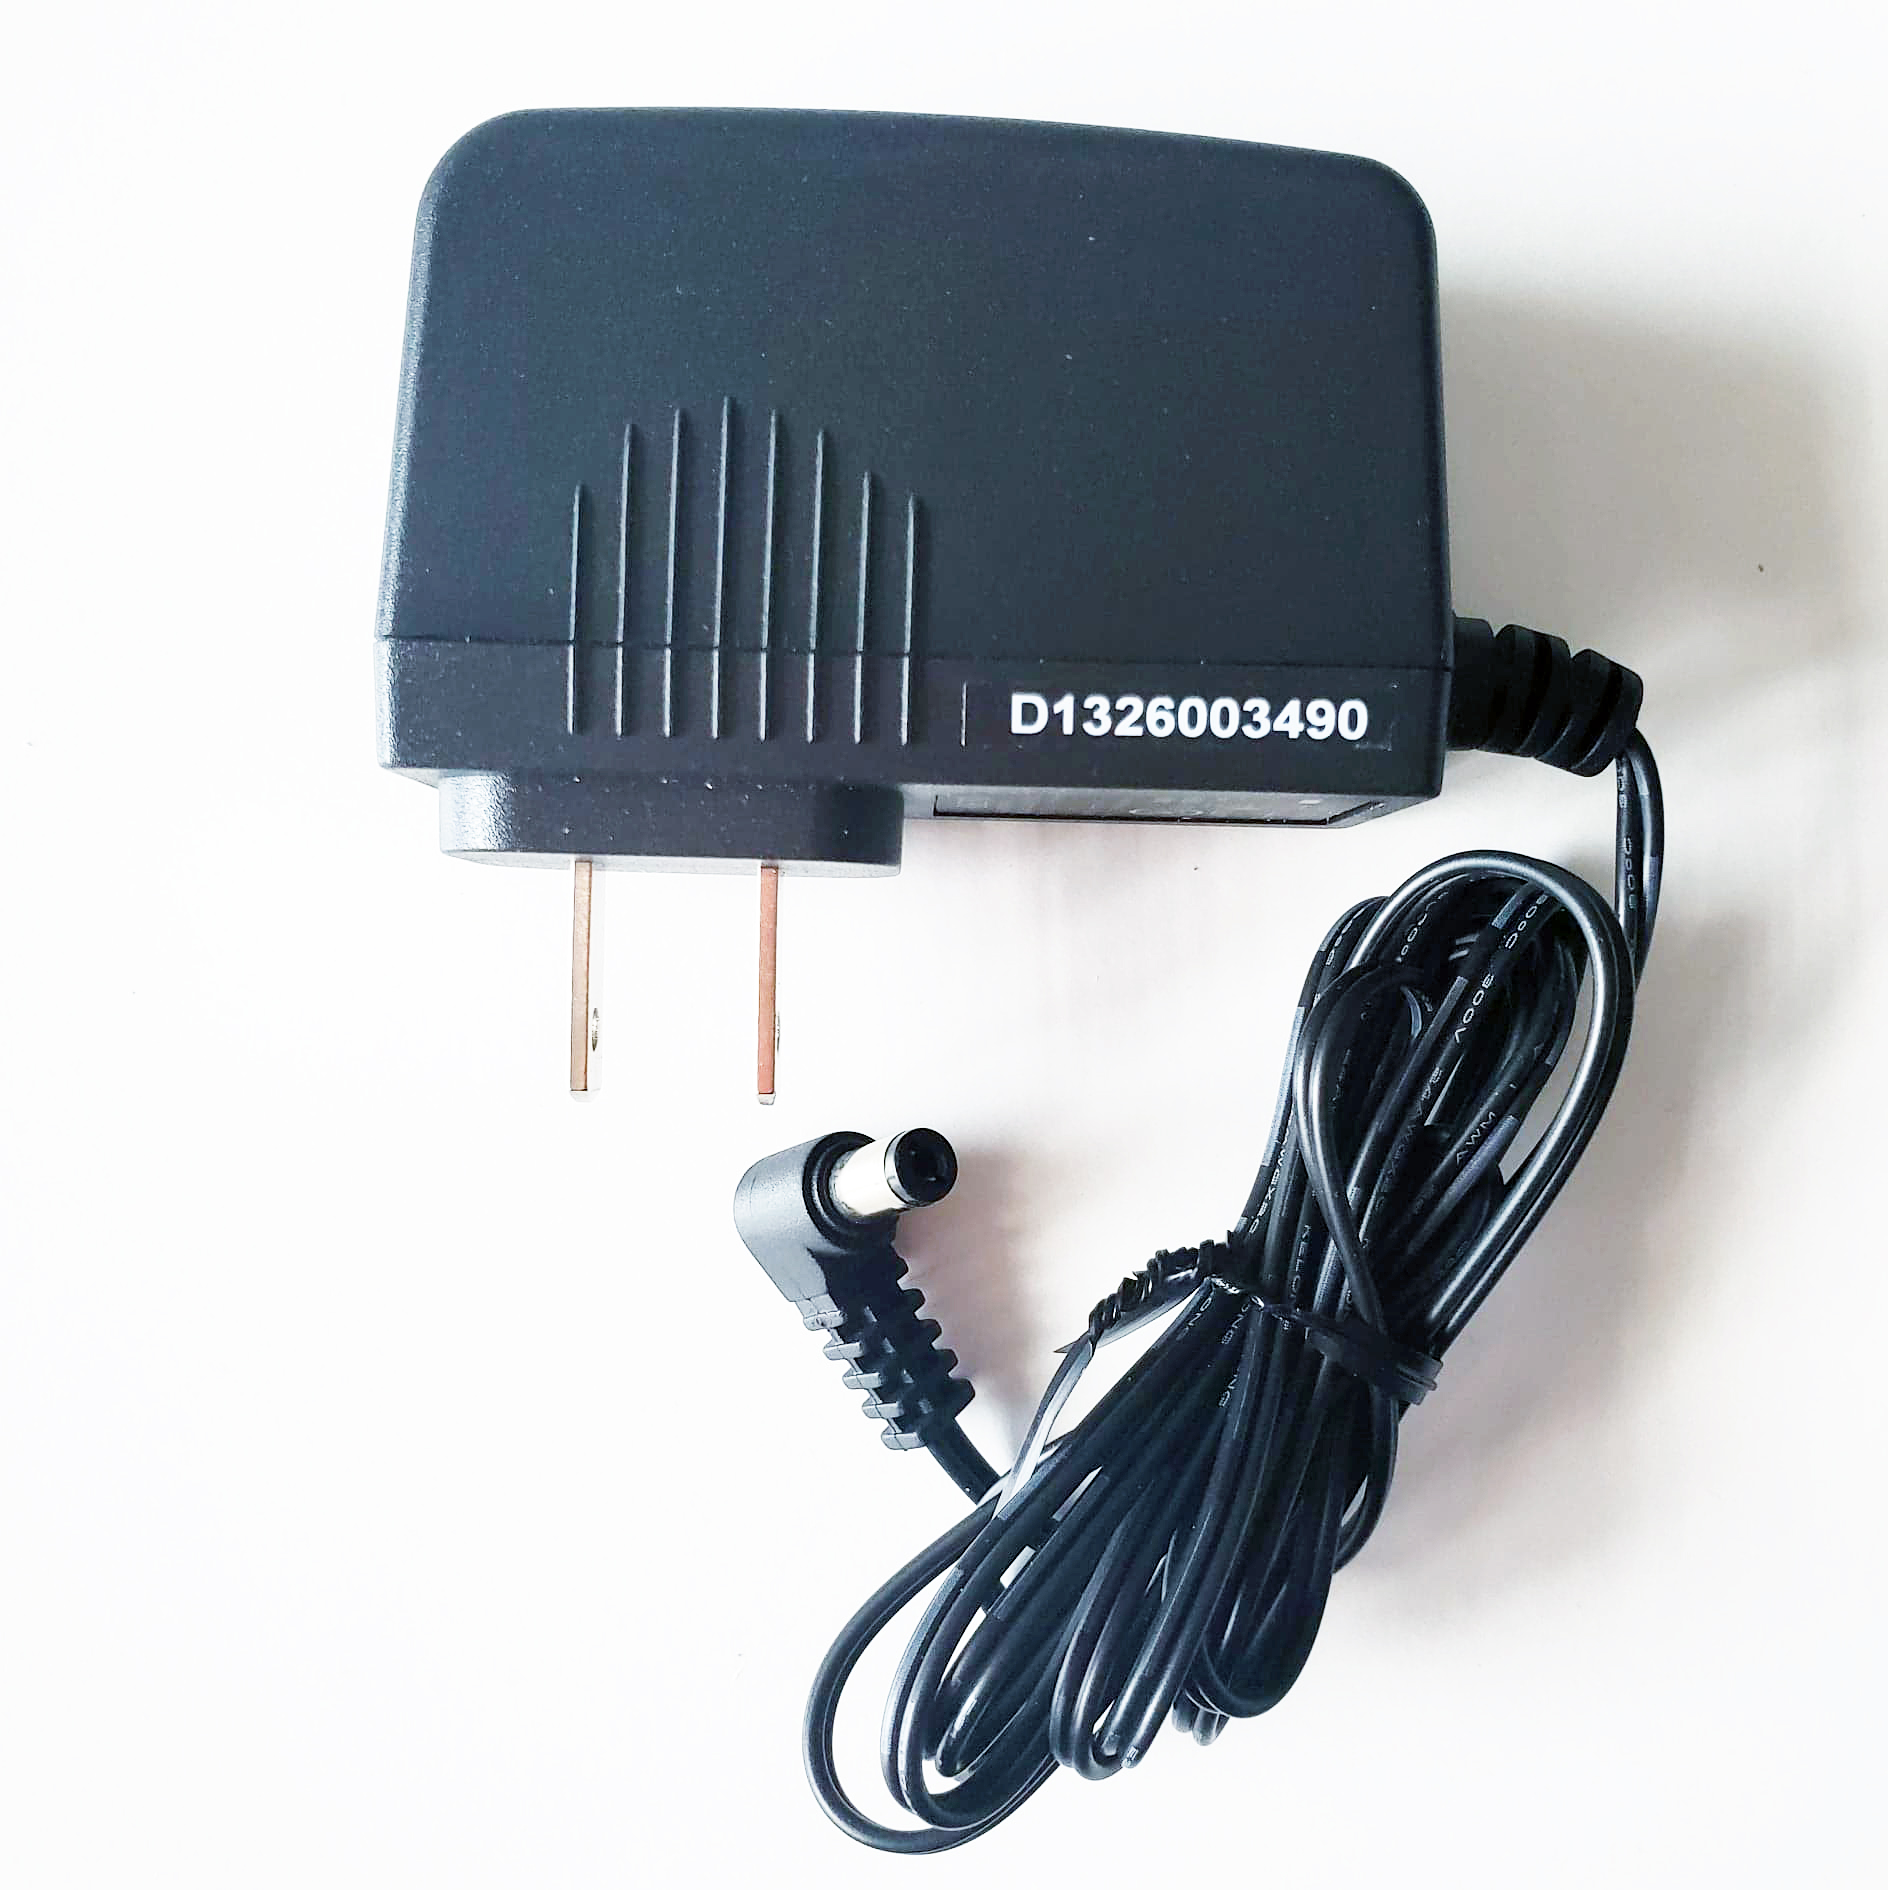 ADS0128-W Power Adapter OEM